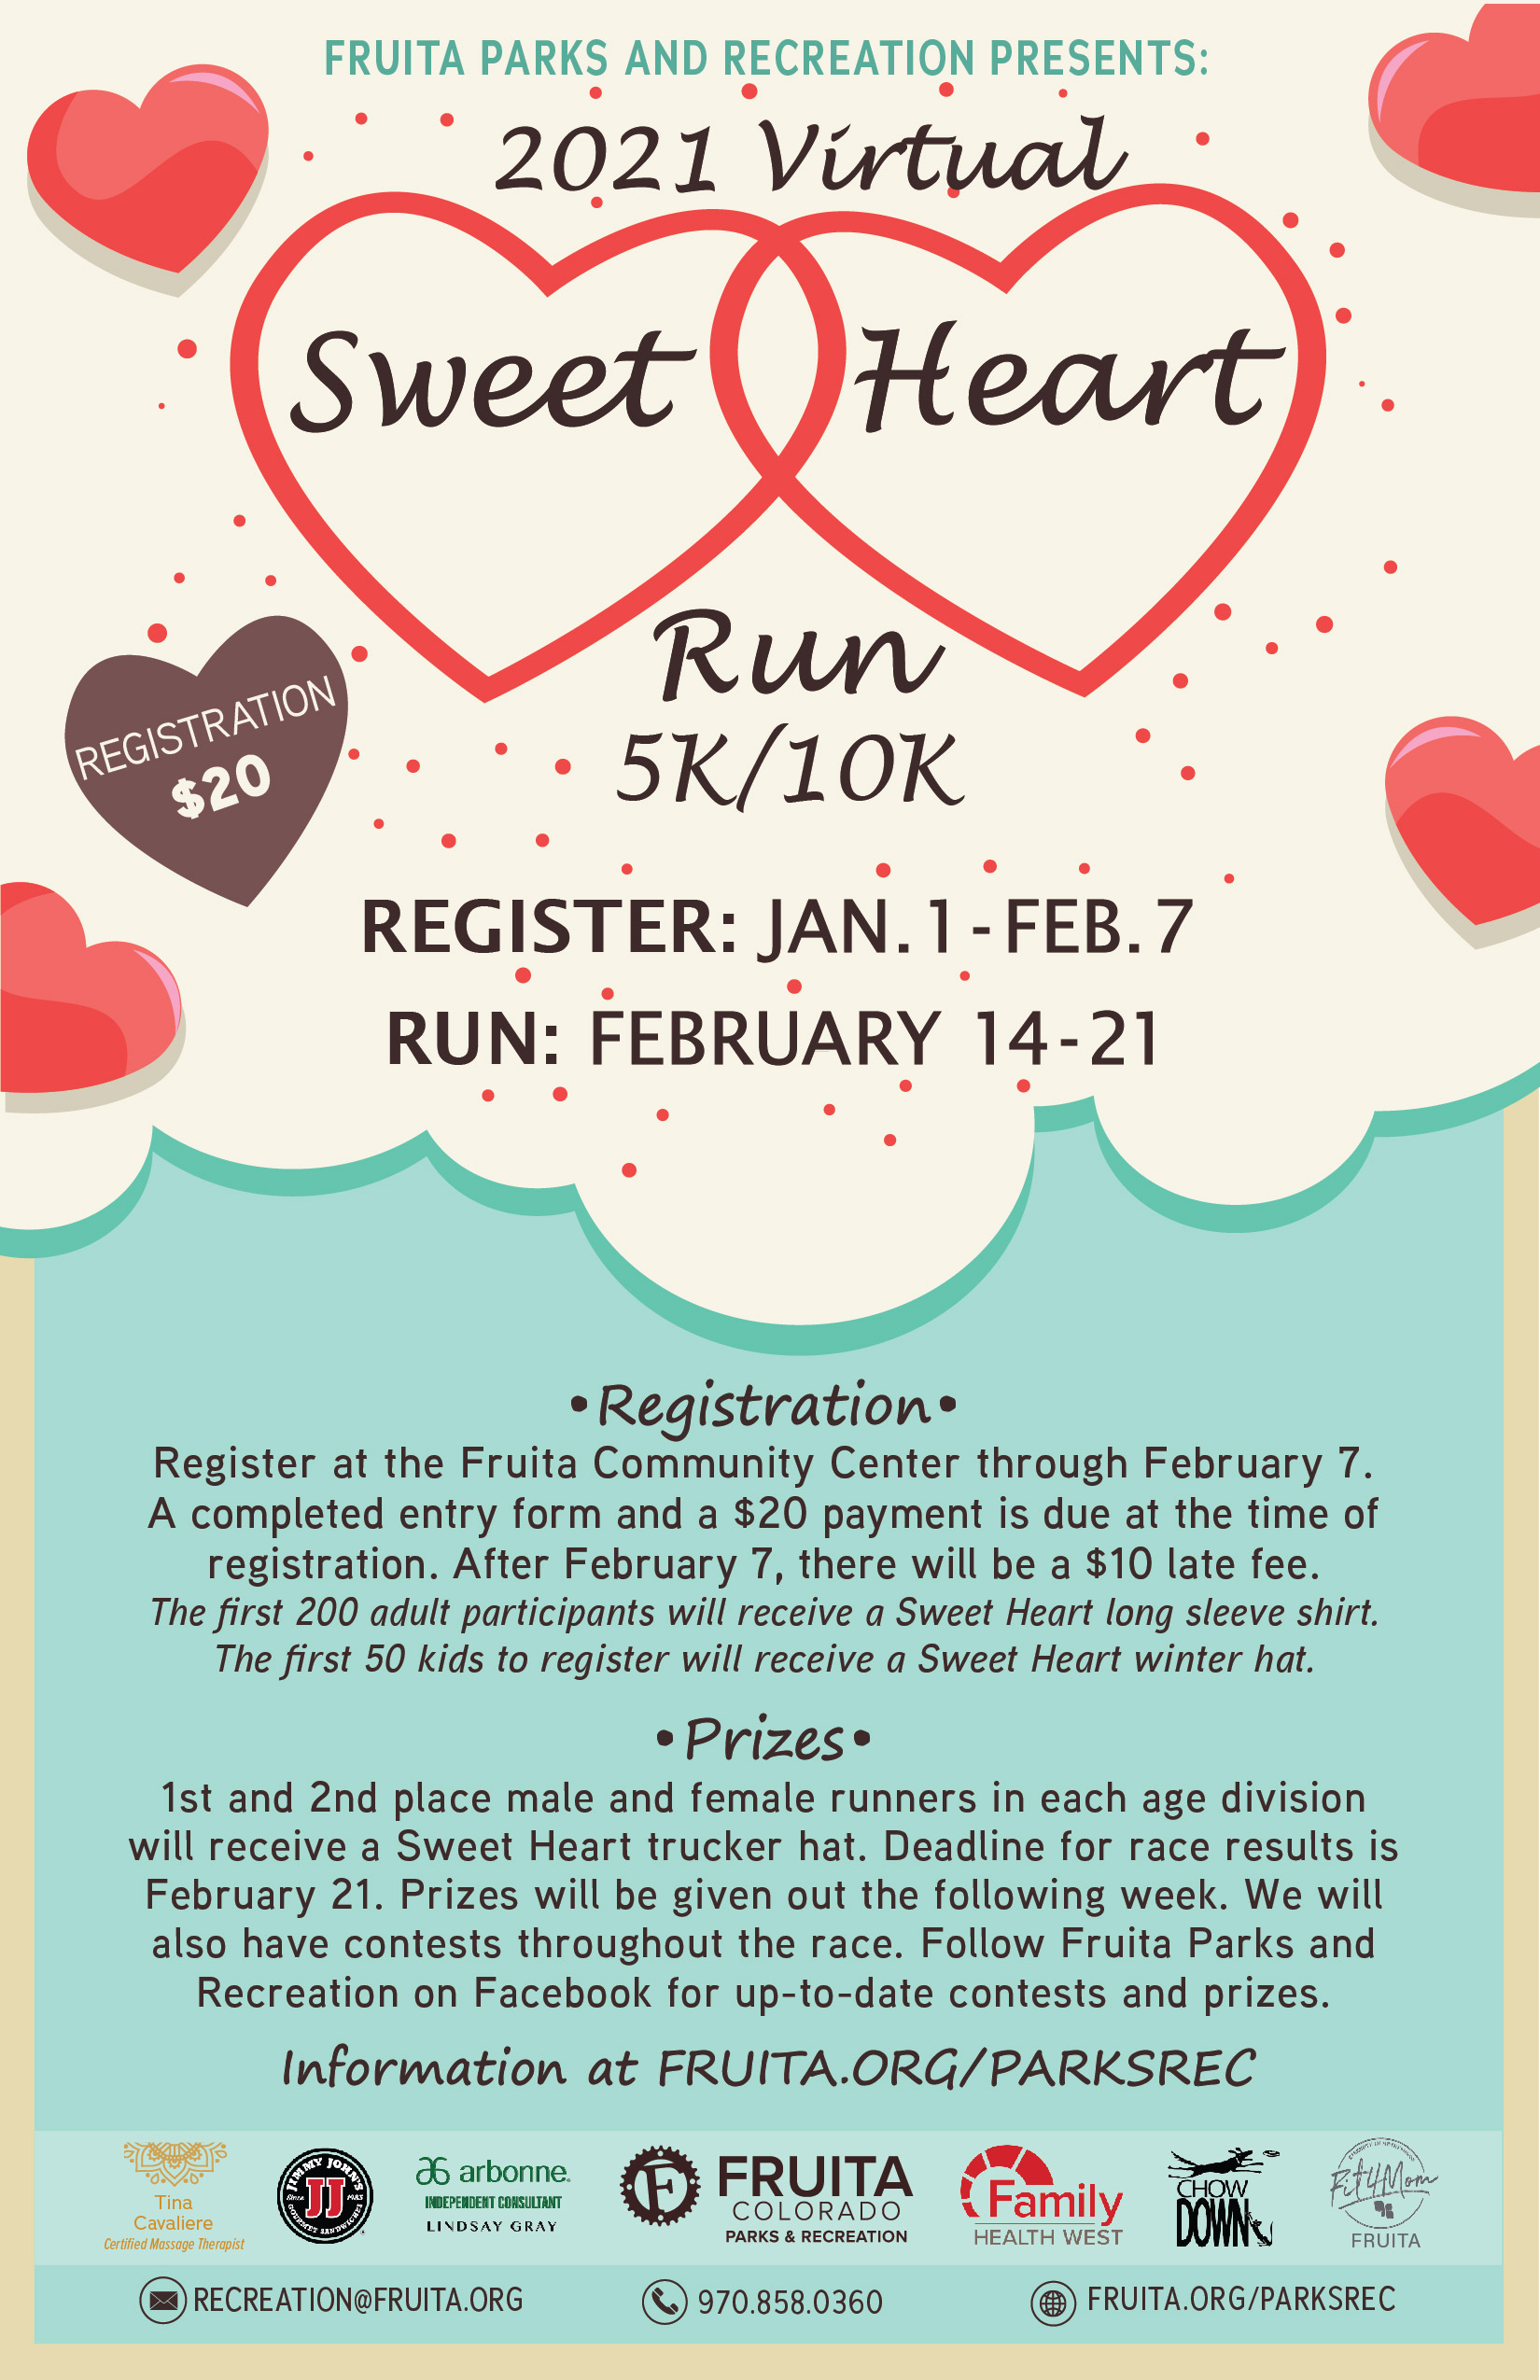 Sweet Heart 5k/10k Run in Fruita, CO Details, Registration, and